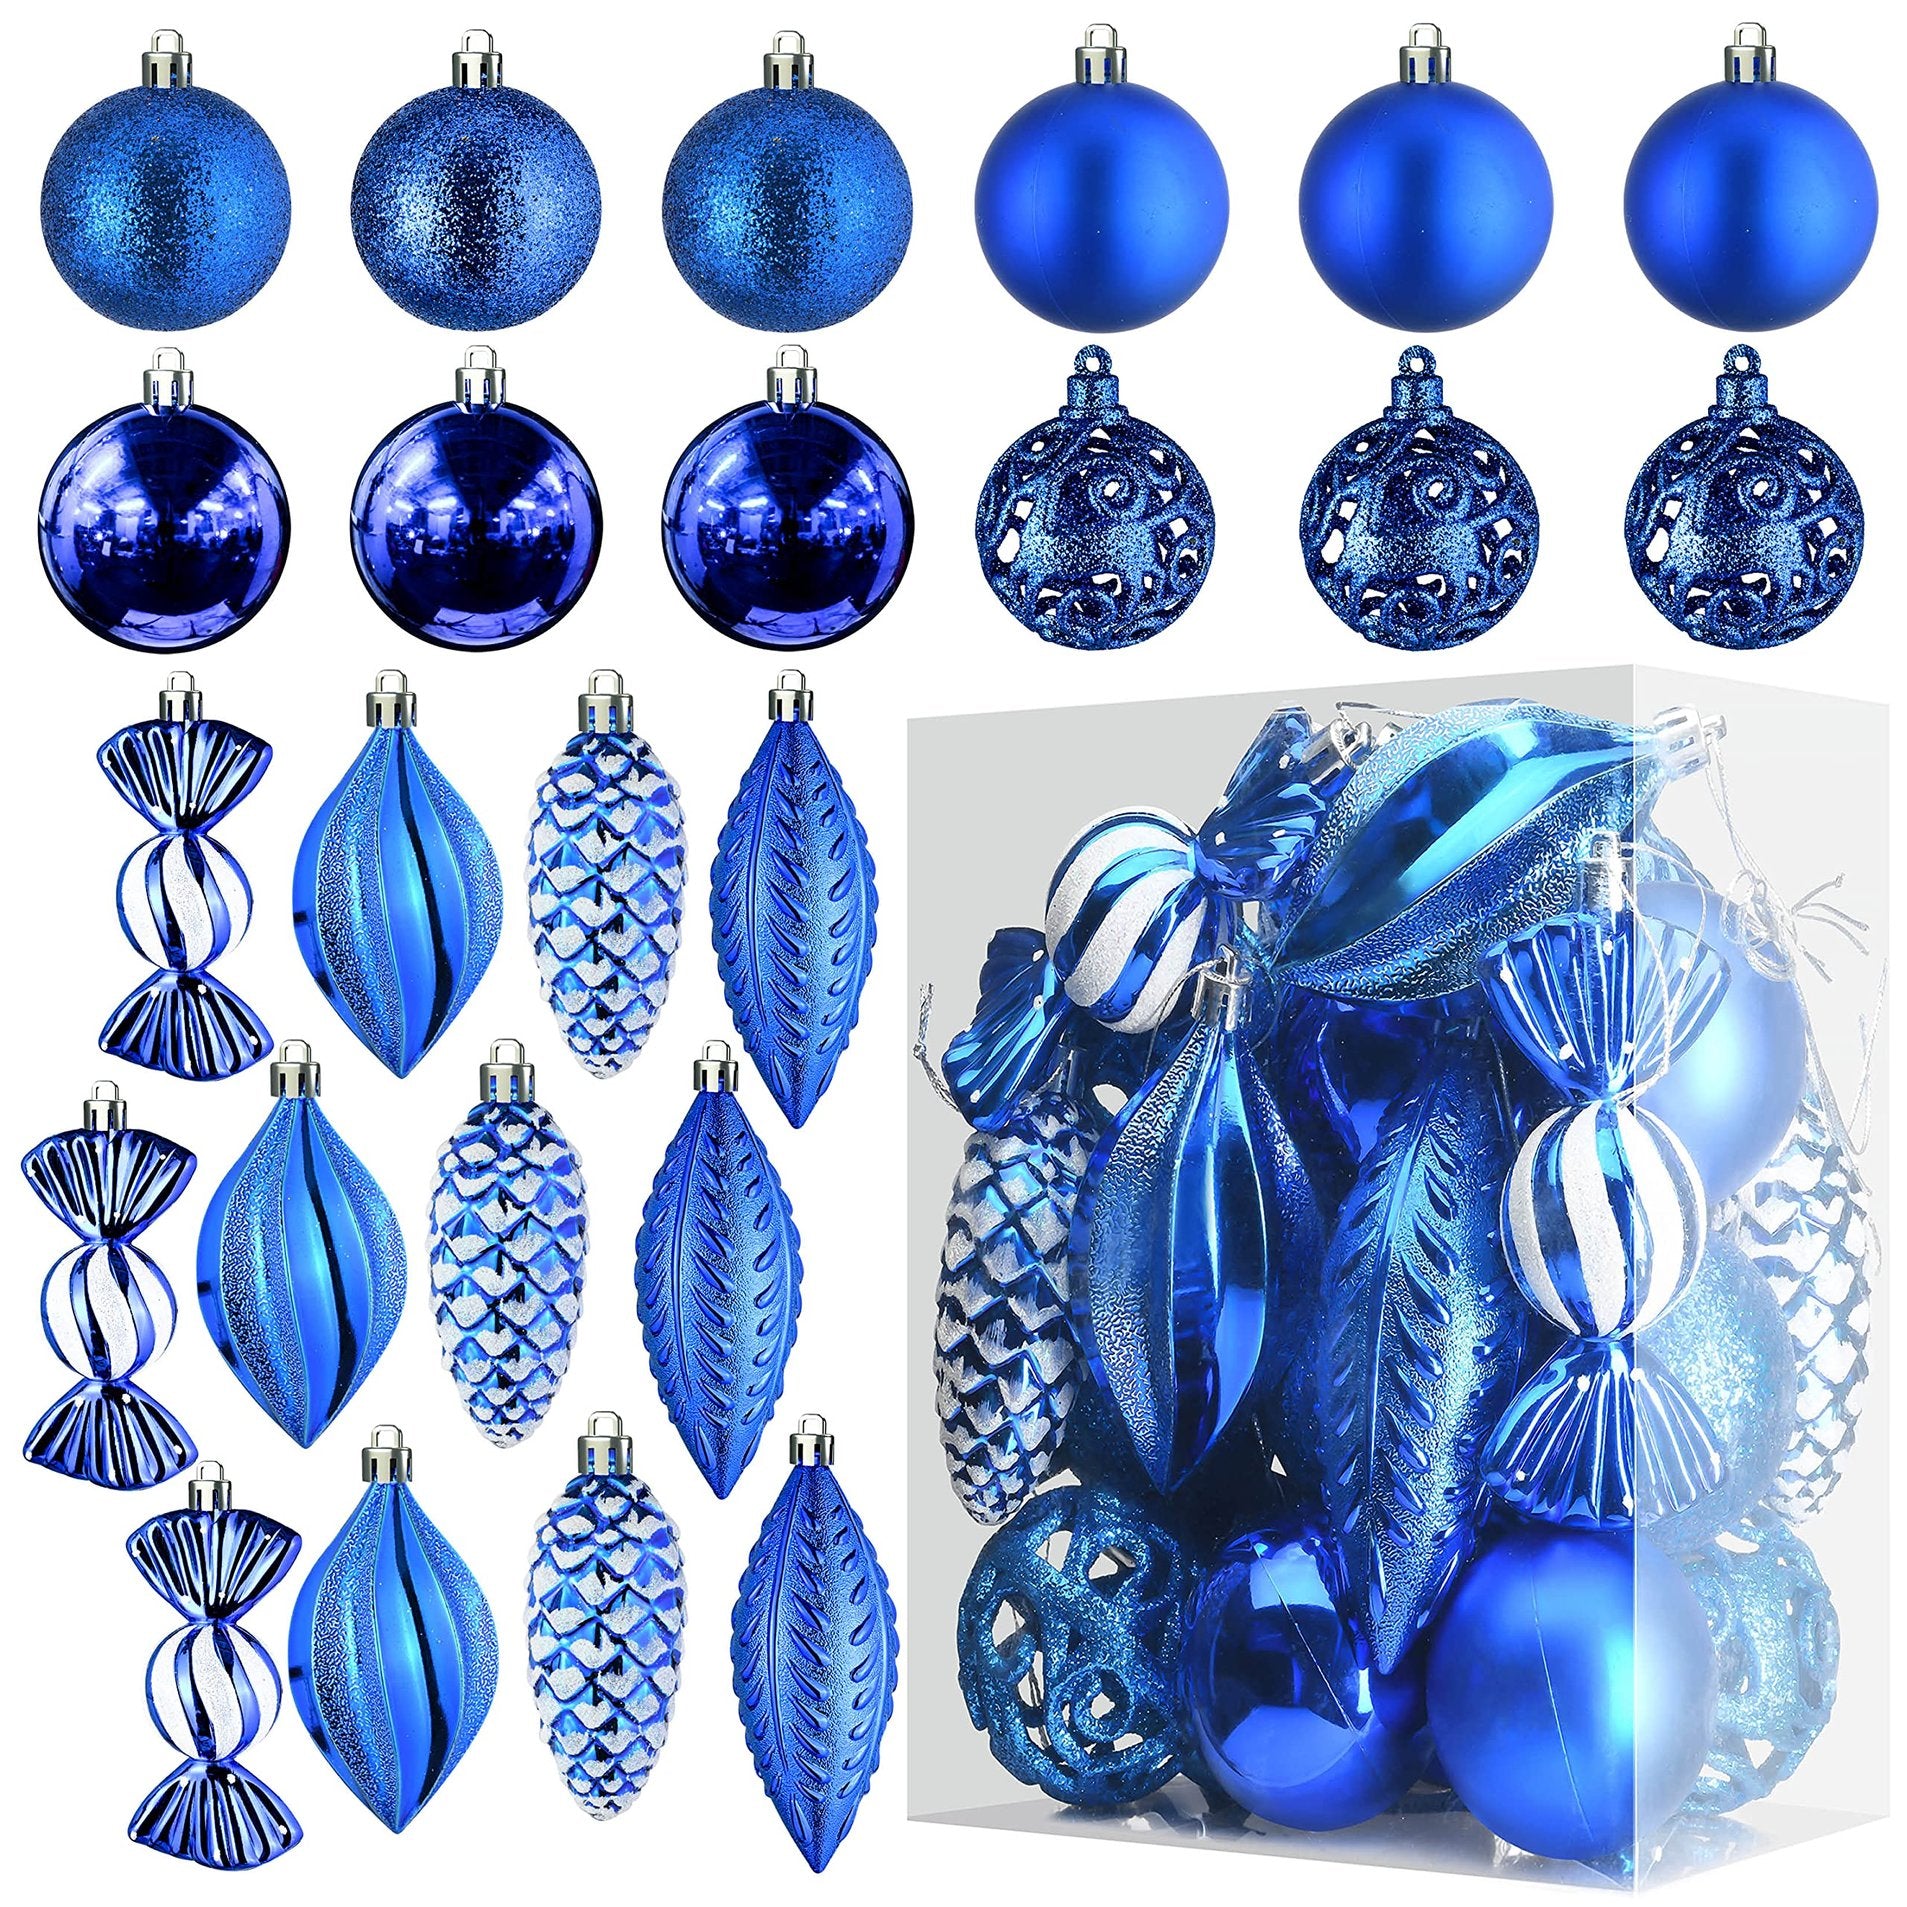 Prextex Christmas Tree Ball Ornaments - Blue Christmas Ornaments Set for Christmas, Holiday, Wreath & Party Decorations (24 pcs - Small, Medium, Large) Shatterproof